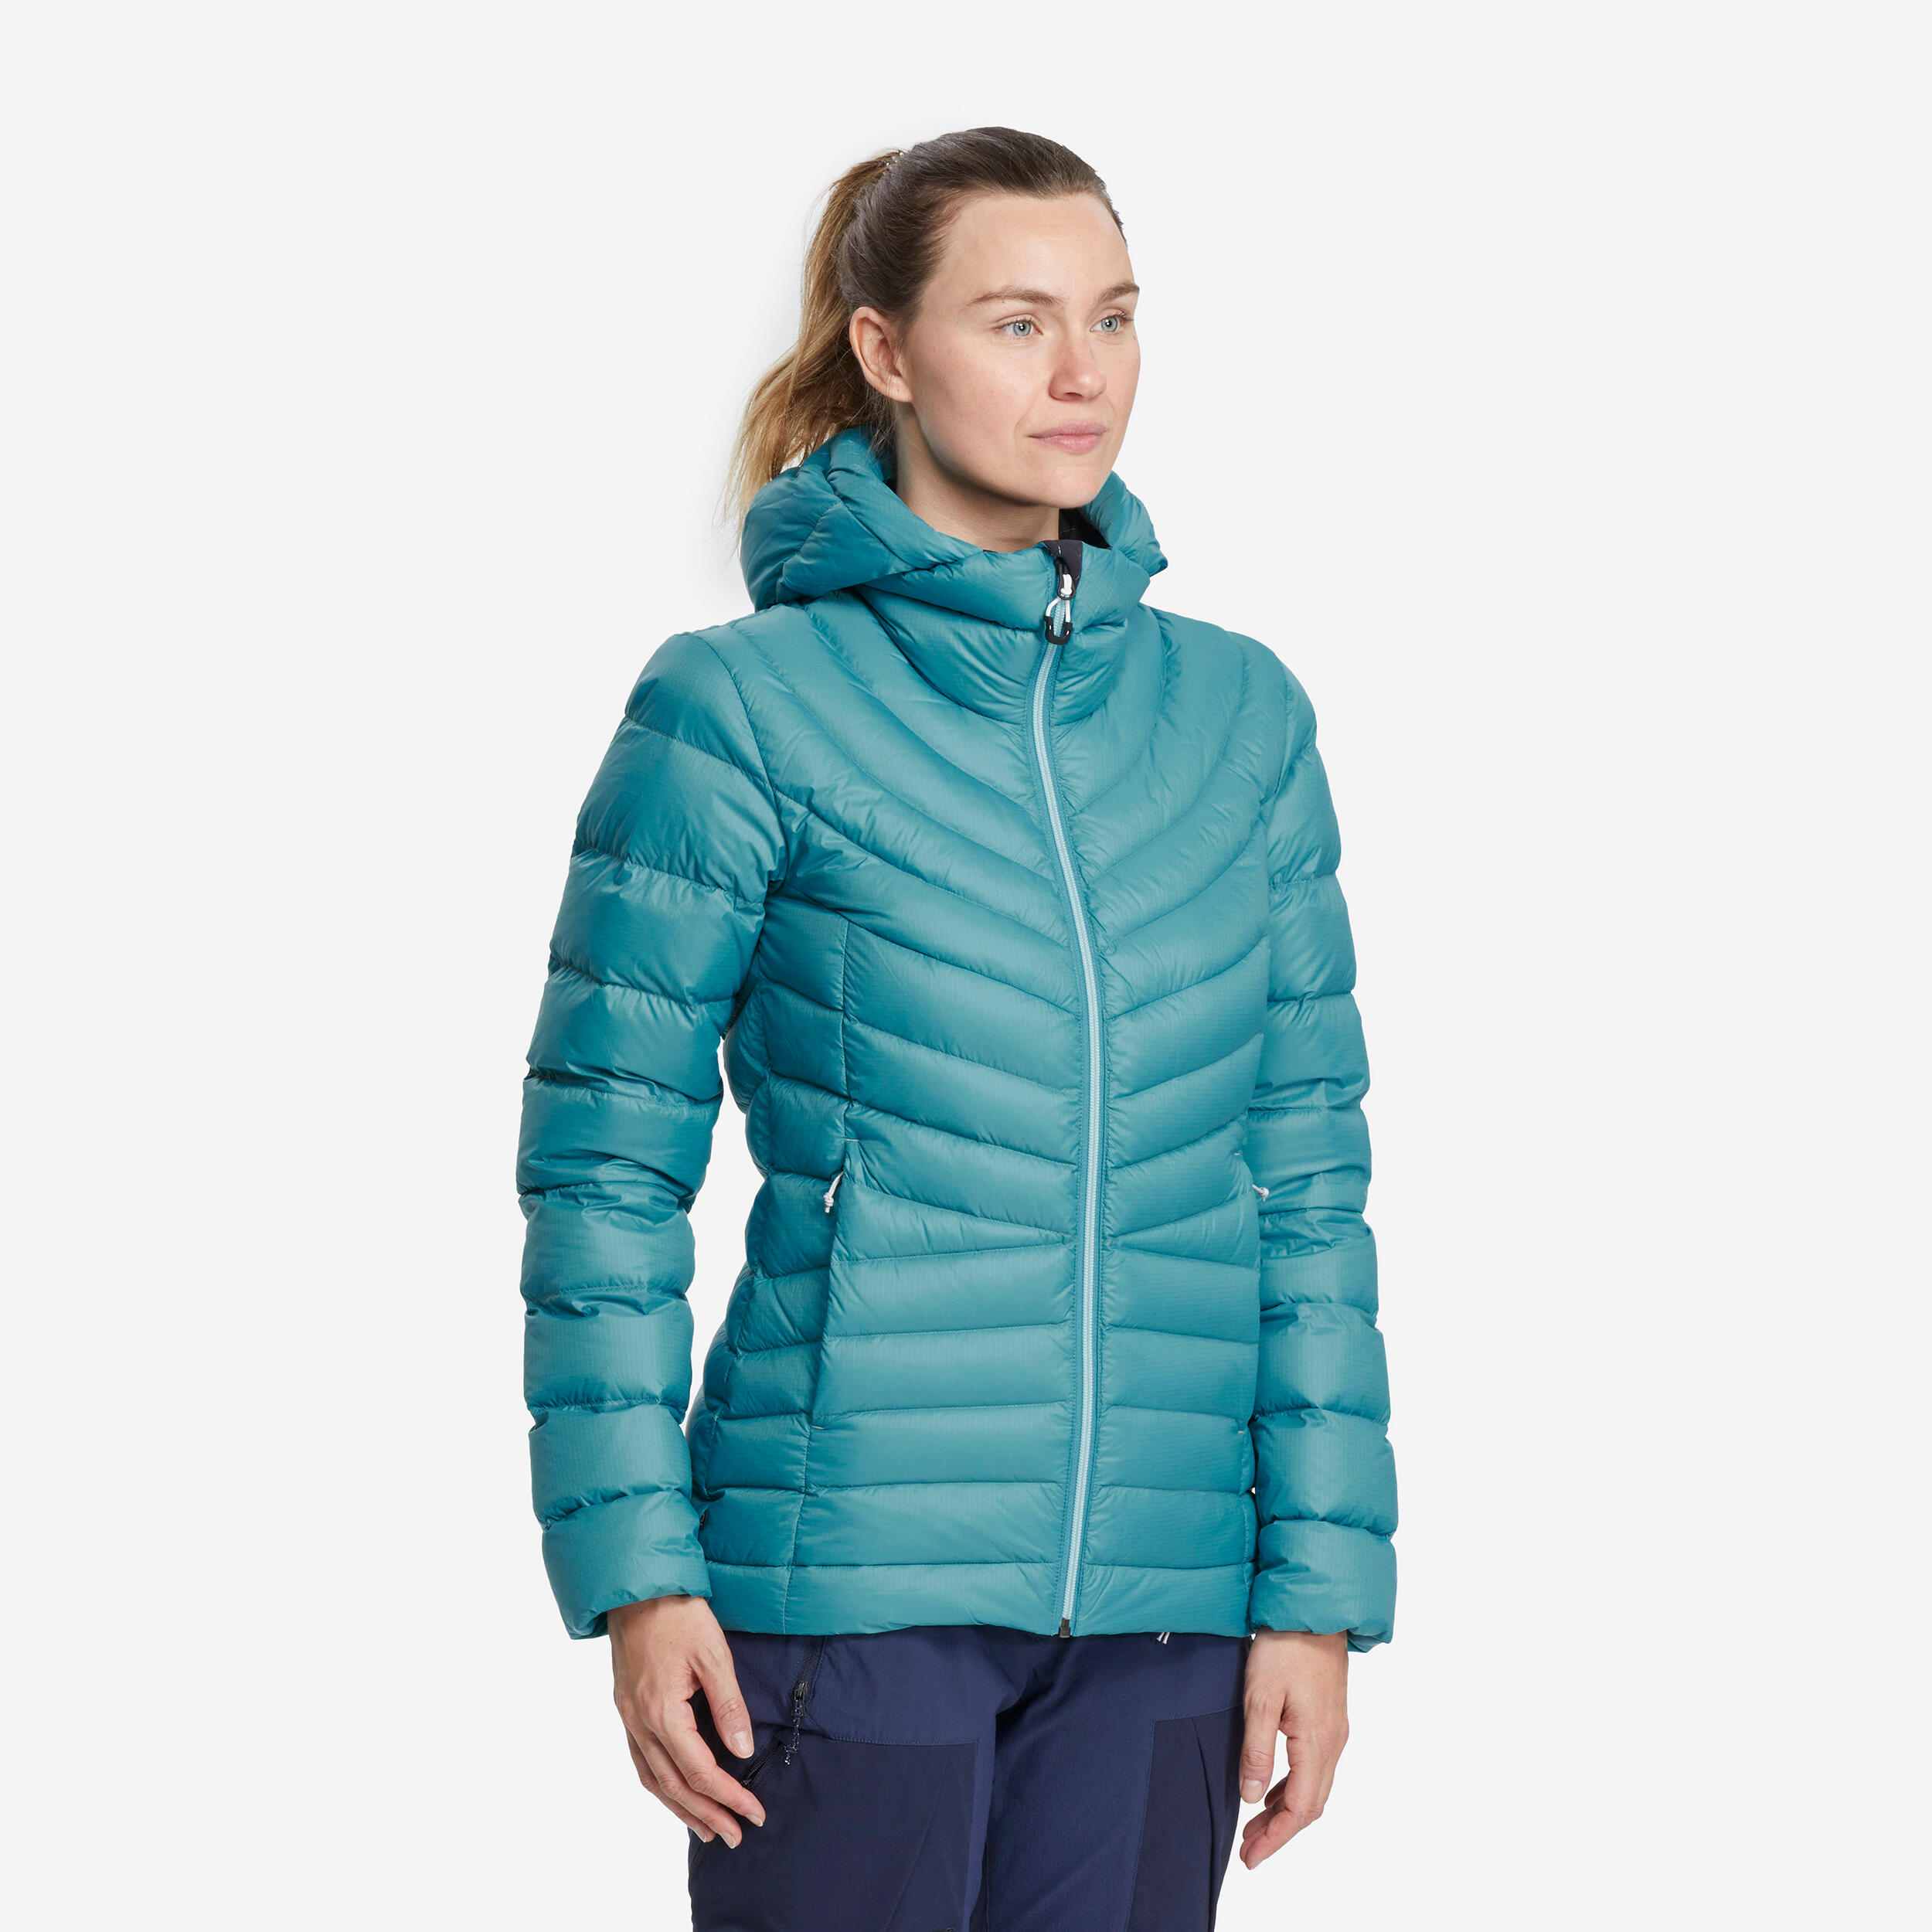 Women’s Down Winter Jacket - MT 500 - ash blue - Forclaz - Decathlon